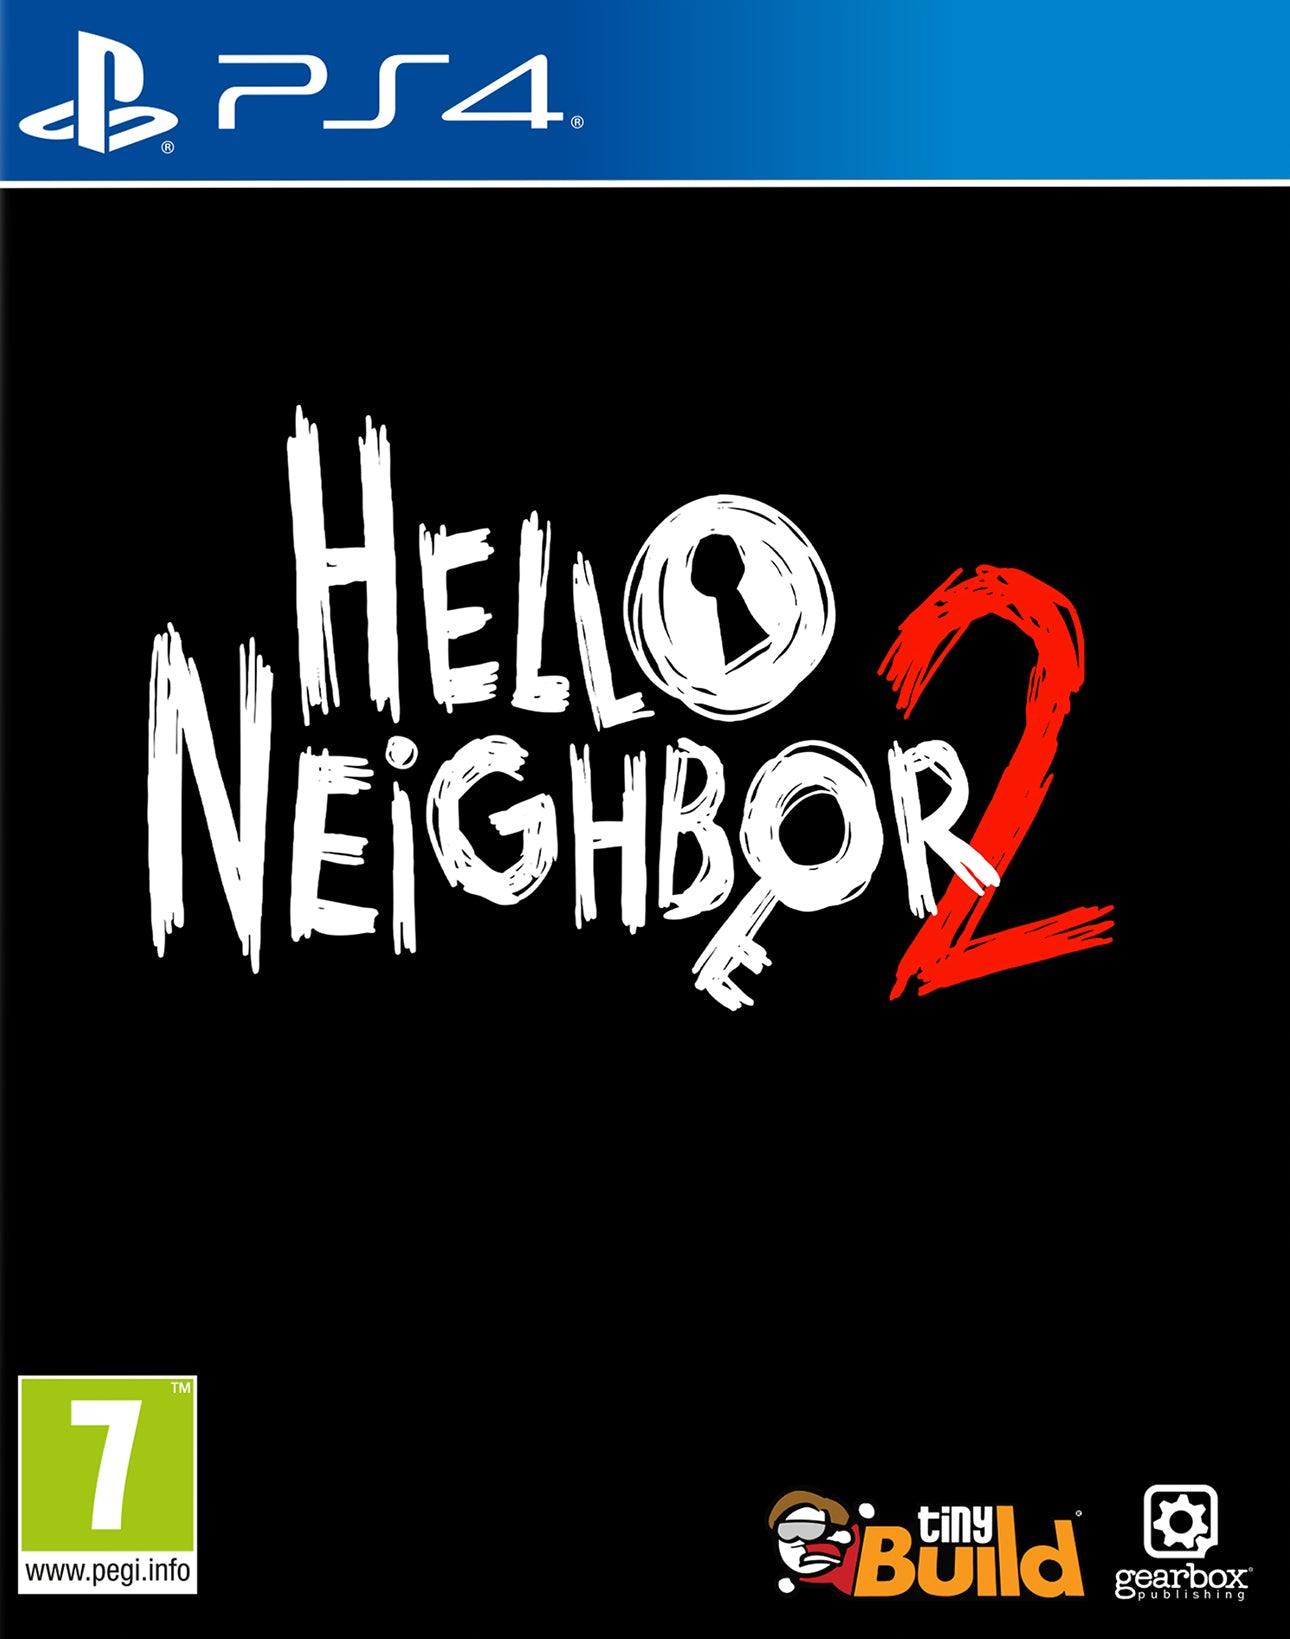 Hello Neighbour 2 - Want a New Gadget